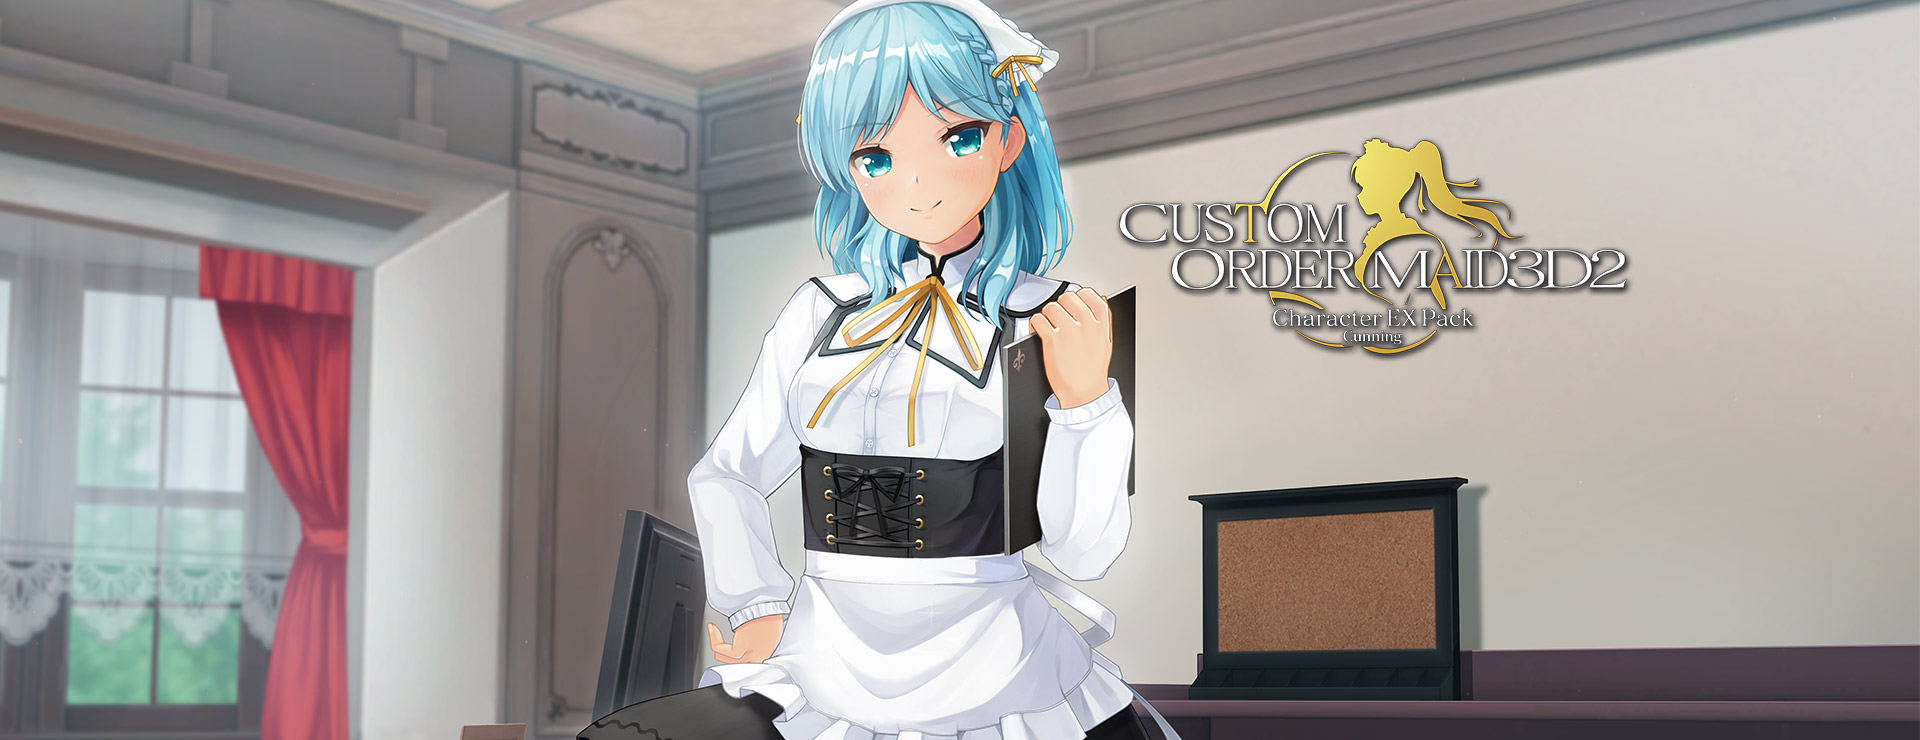 Custom Order Maid 3D: Character EX Pack Cunning - シミュレーション ゲーム